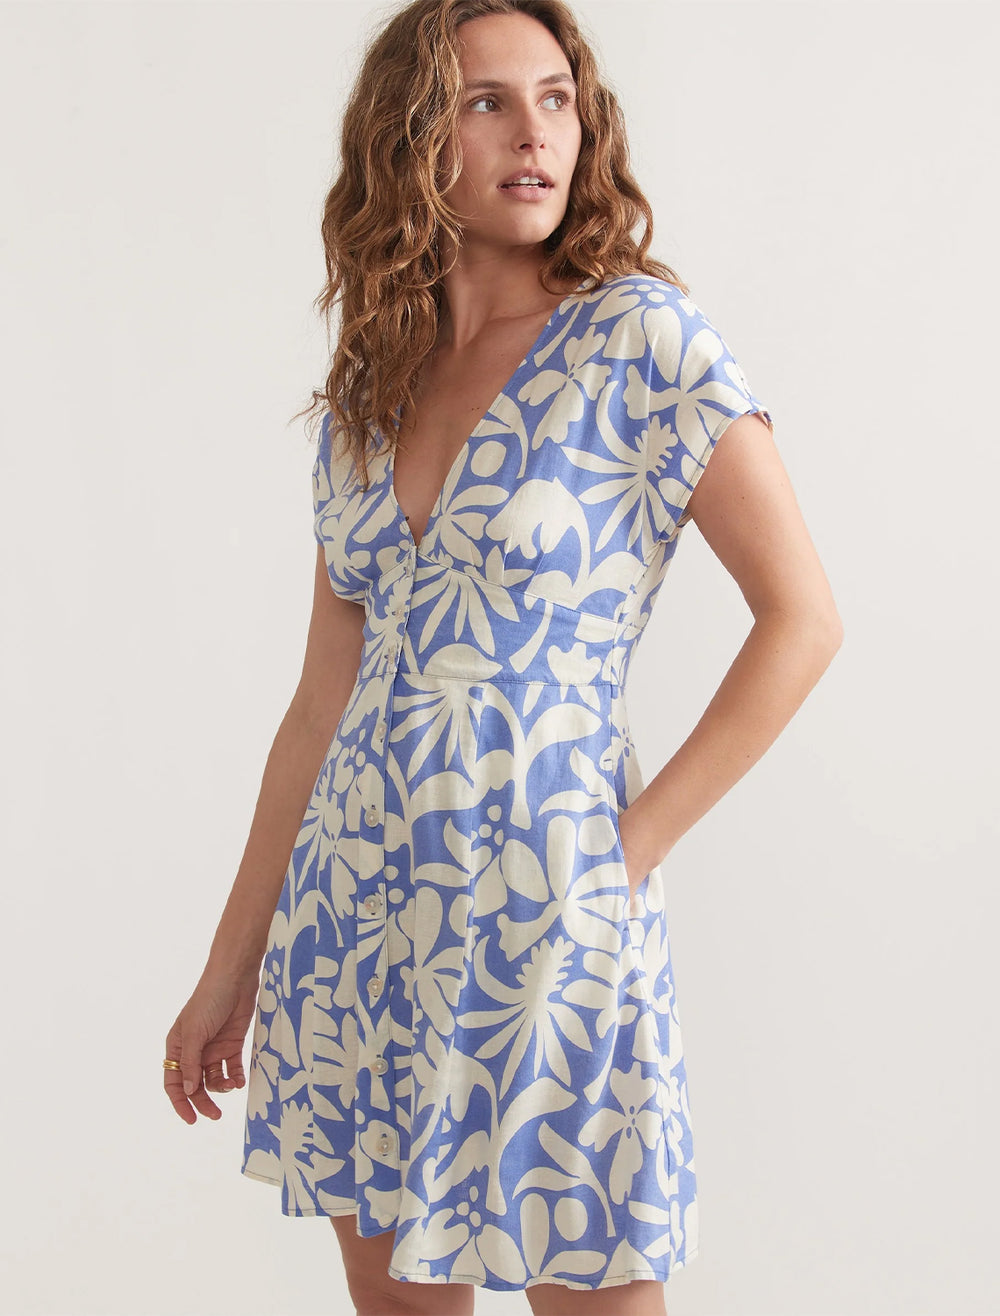 Model wearing Marine Layer's camila mini dress in twilight blue flora.